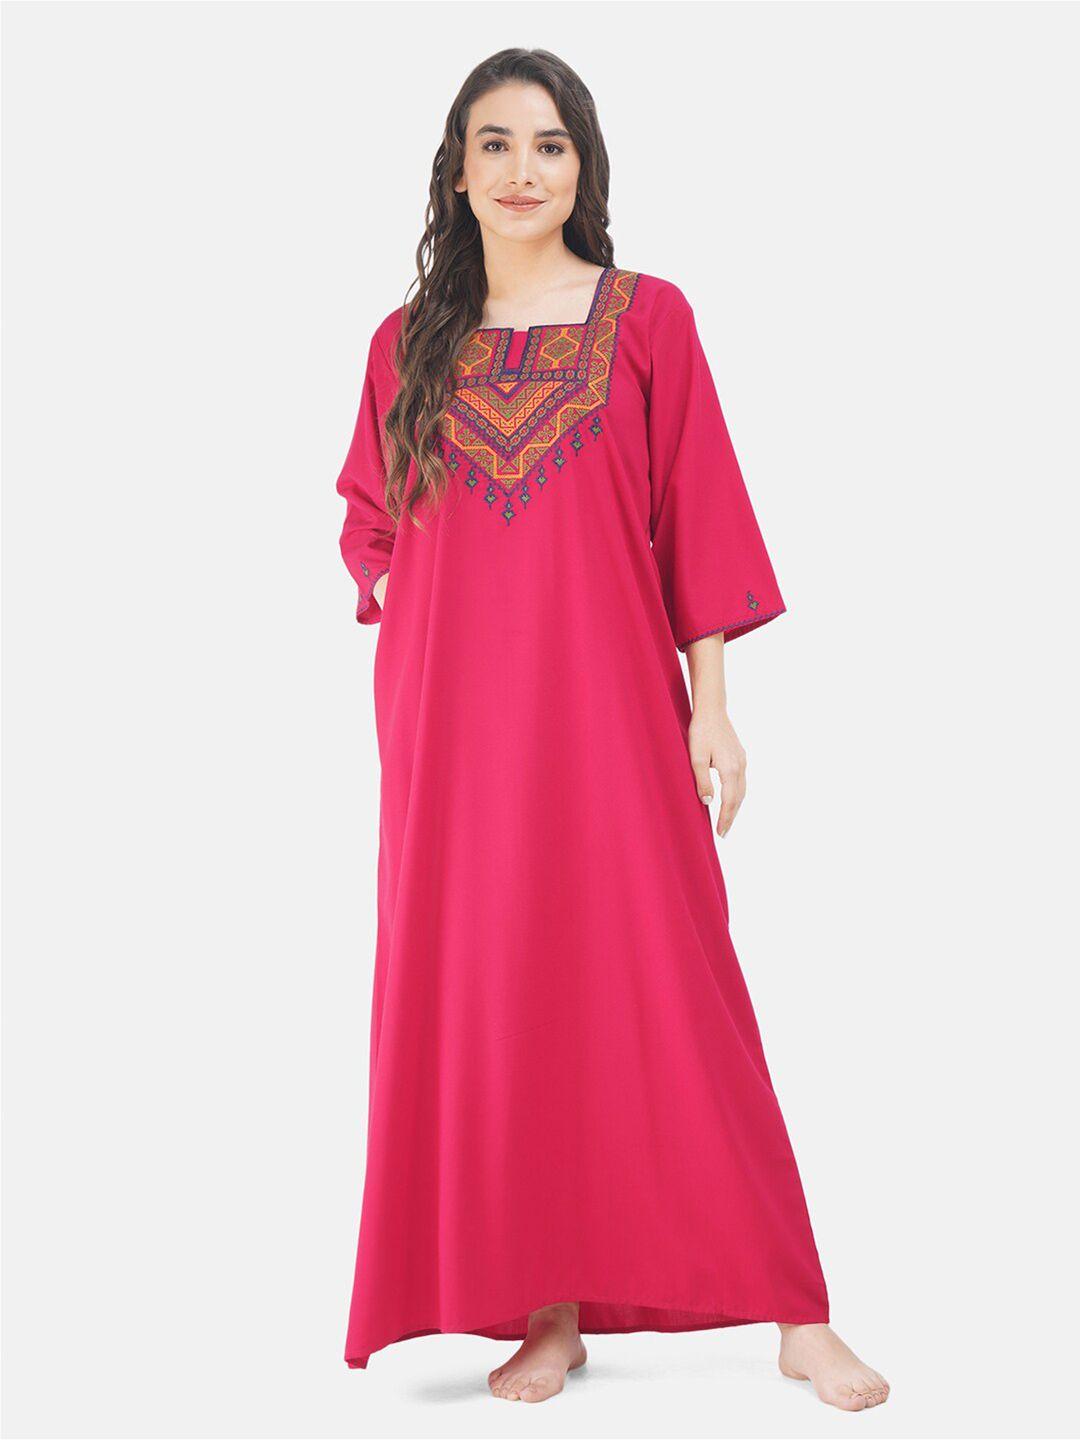 koi sleepwear pink embroidered maxi nightdress chatai full pink